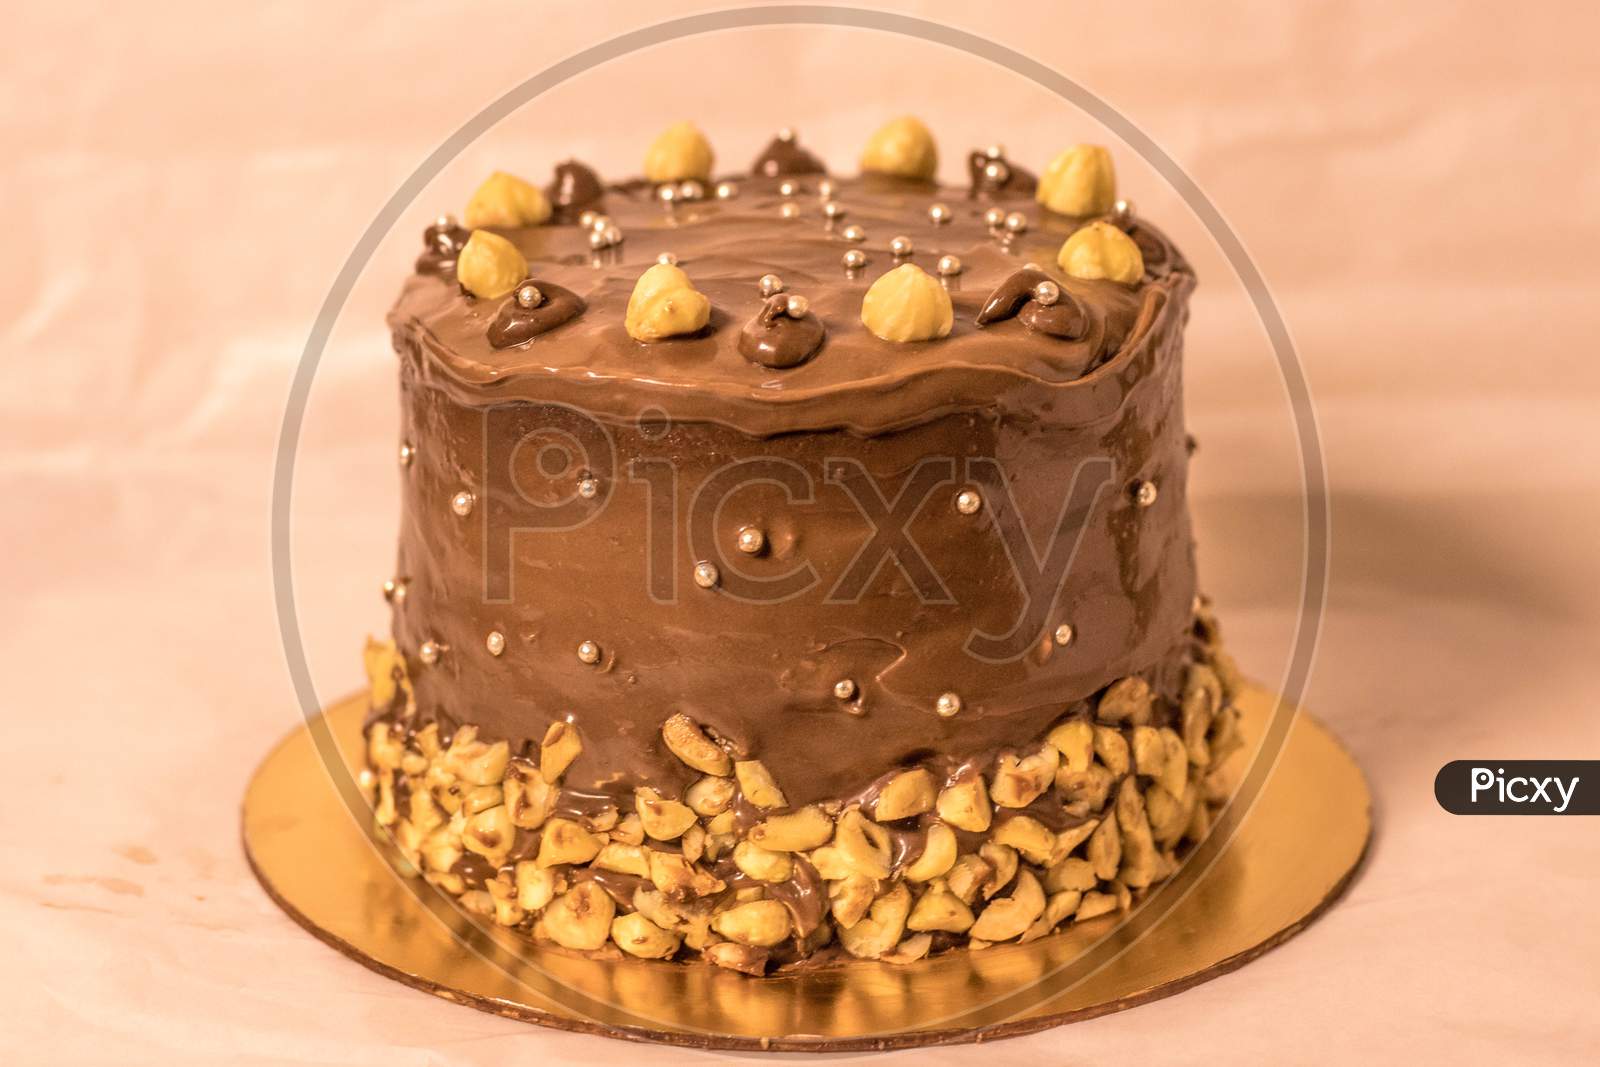 Hazelnut chocloate truffle birthday cake